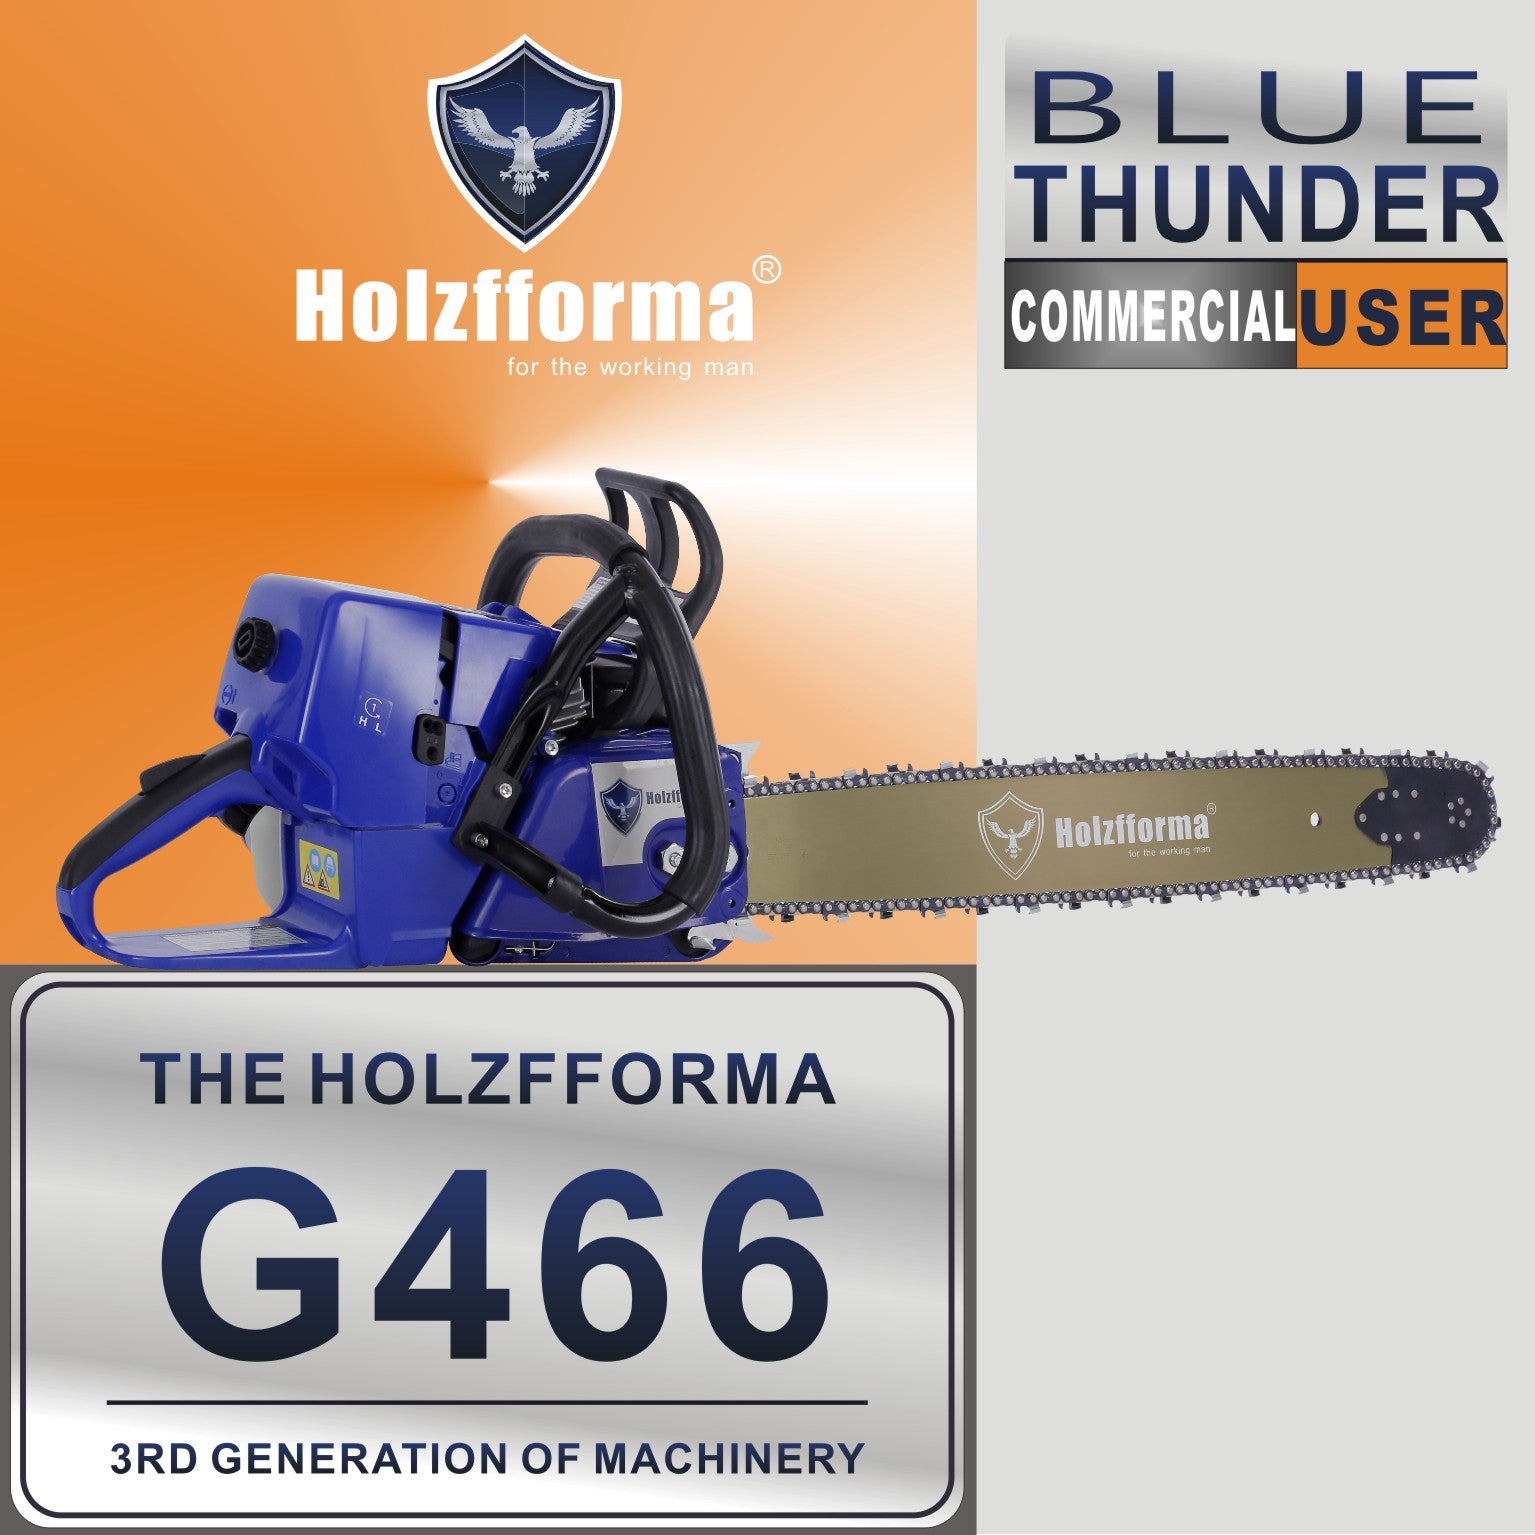 Holzfforma® G466 con espada de 20"